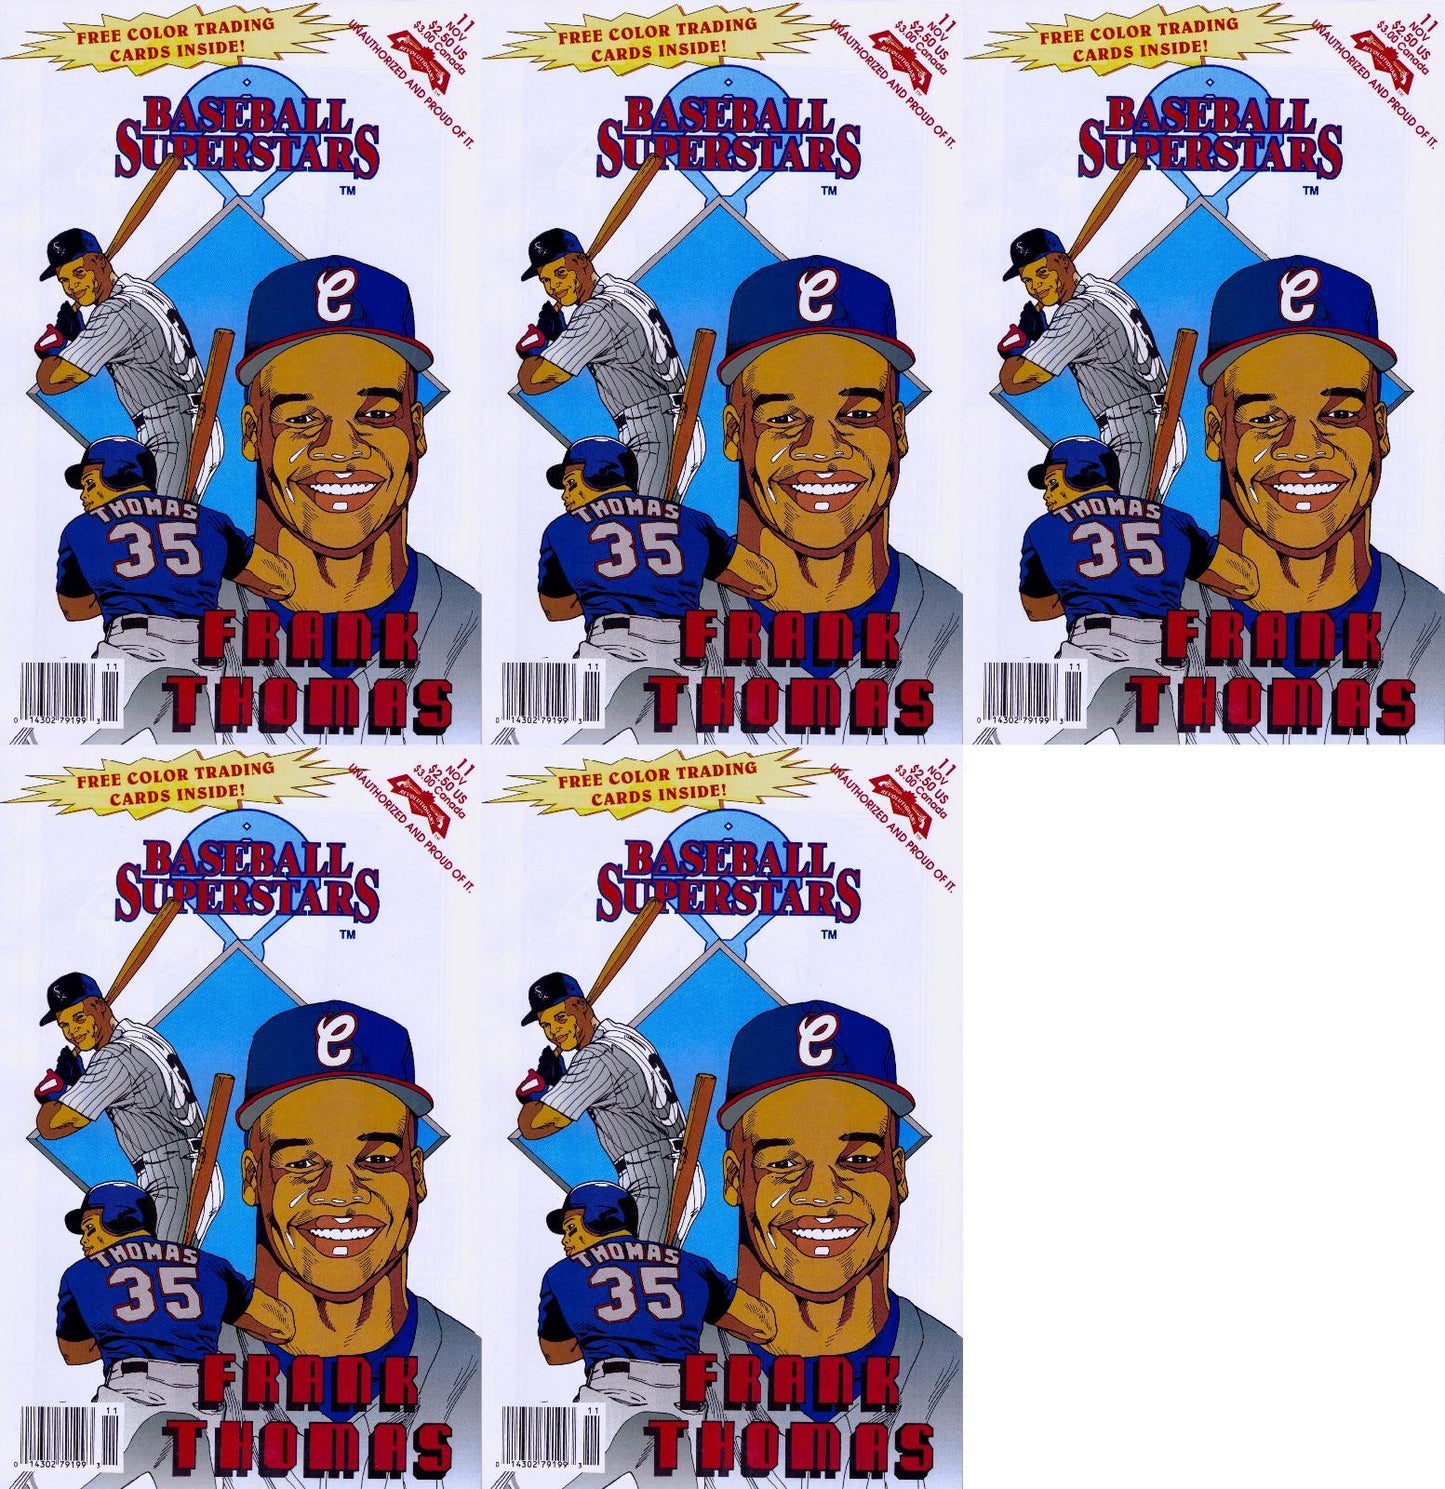 Baseball Superstars #11 Thomas Newsstand (1991-1993) Revolutionary - 5 Comics